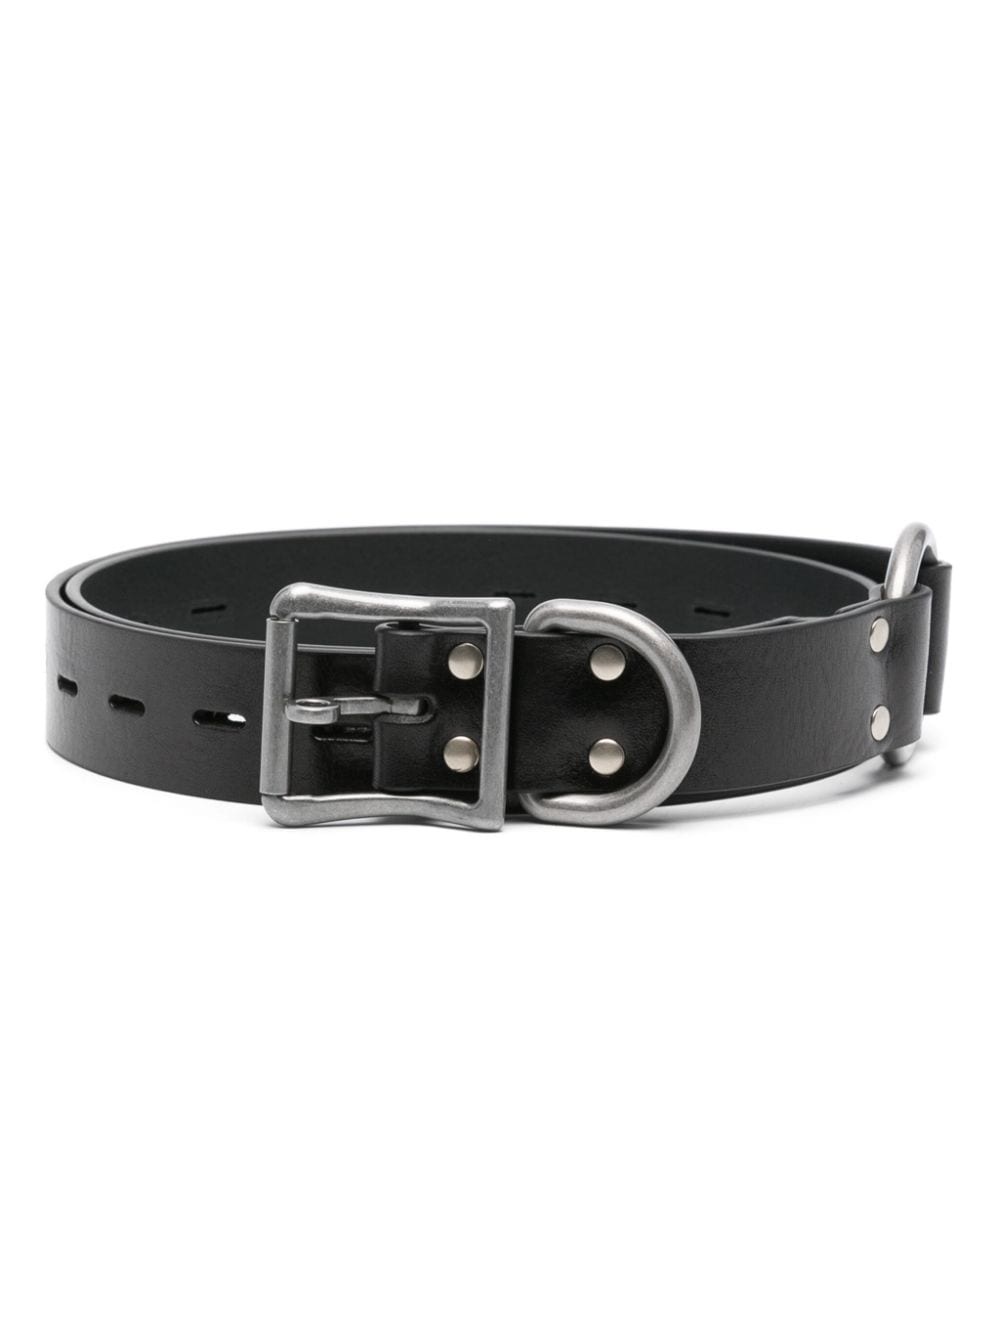 debossed-logo leather belt - 1